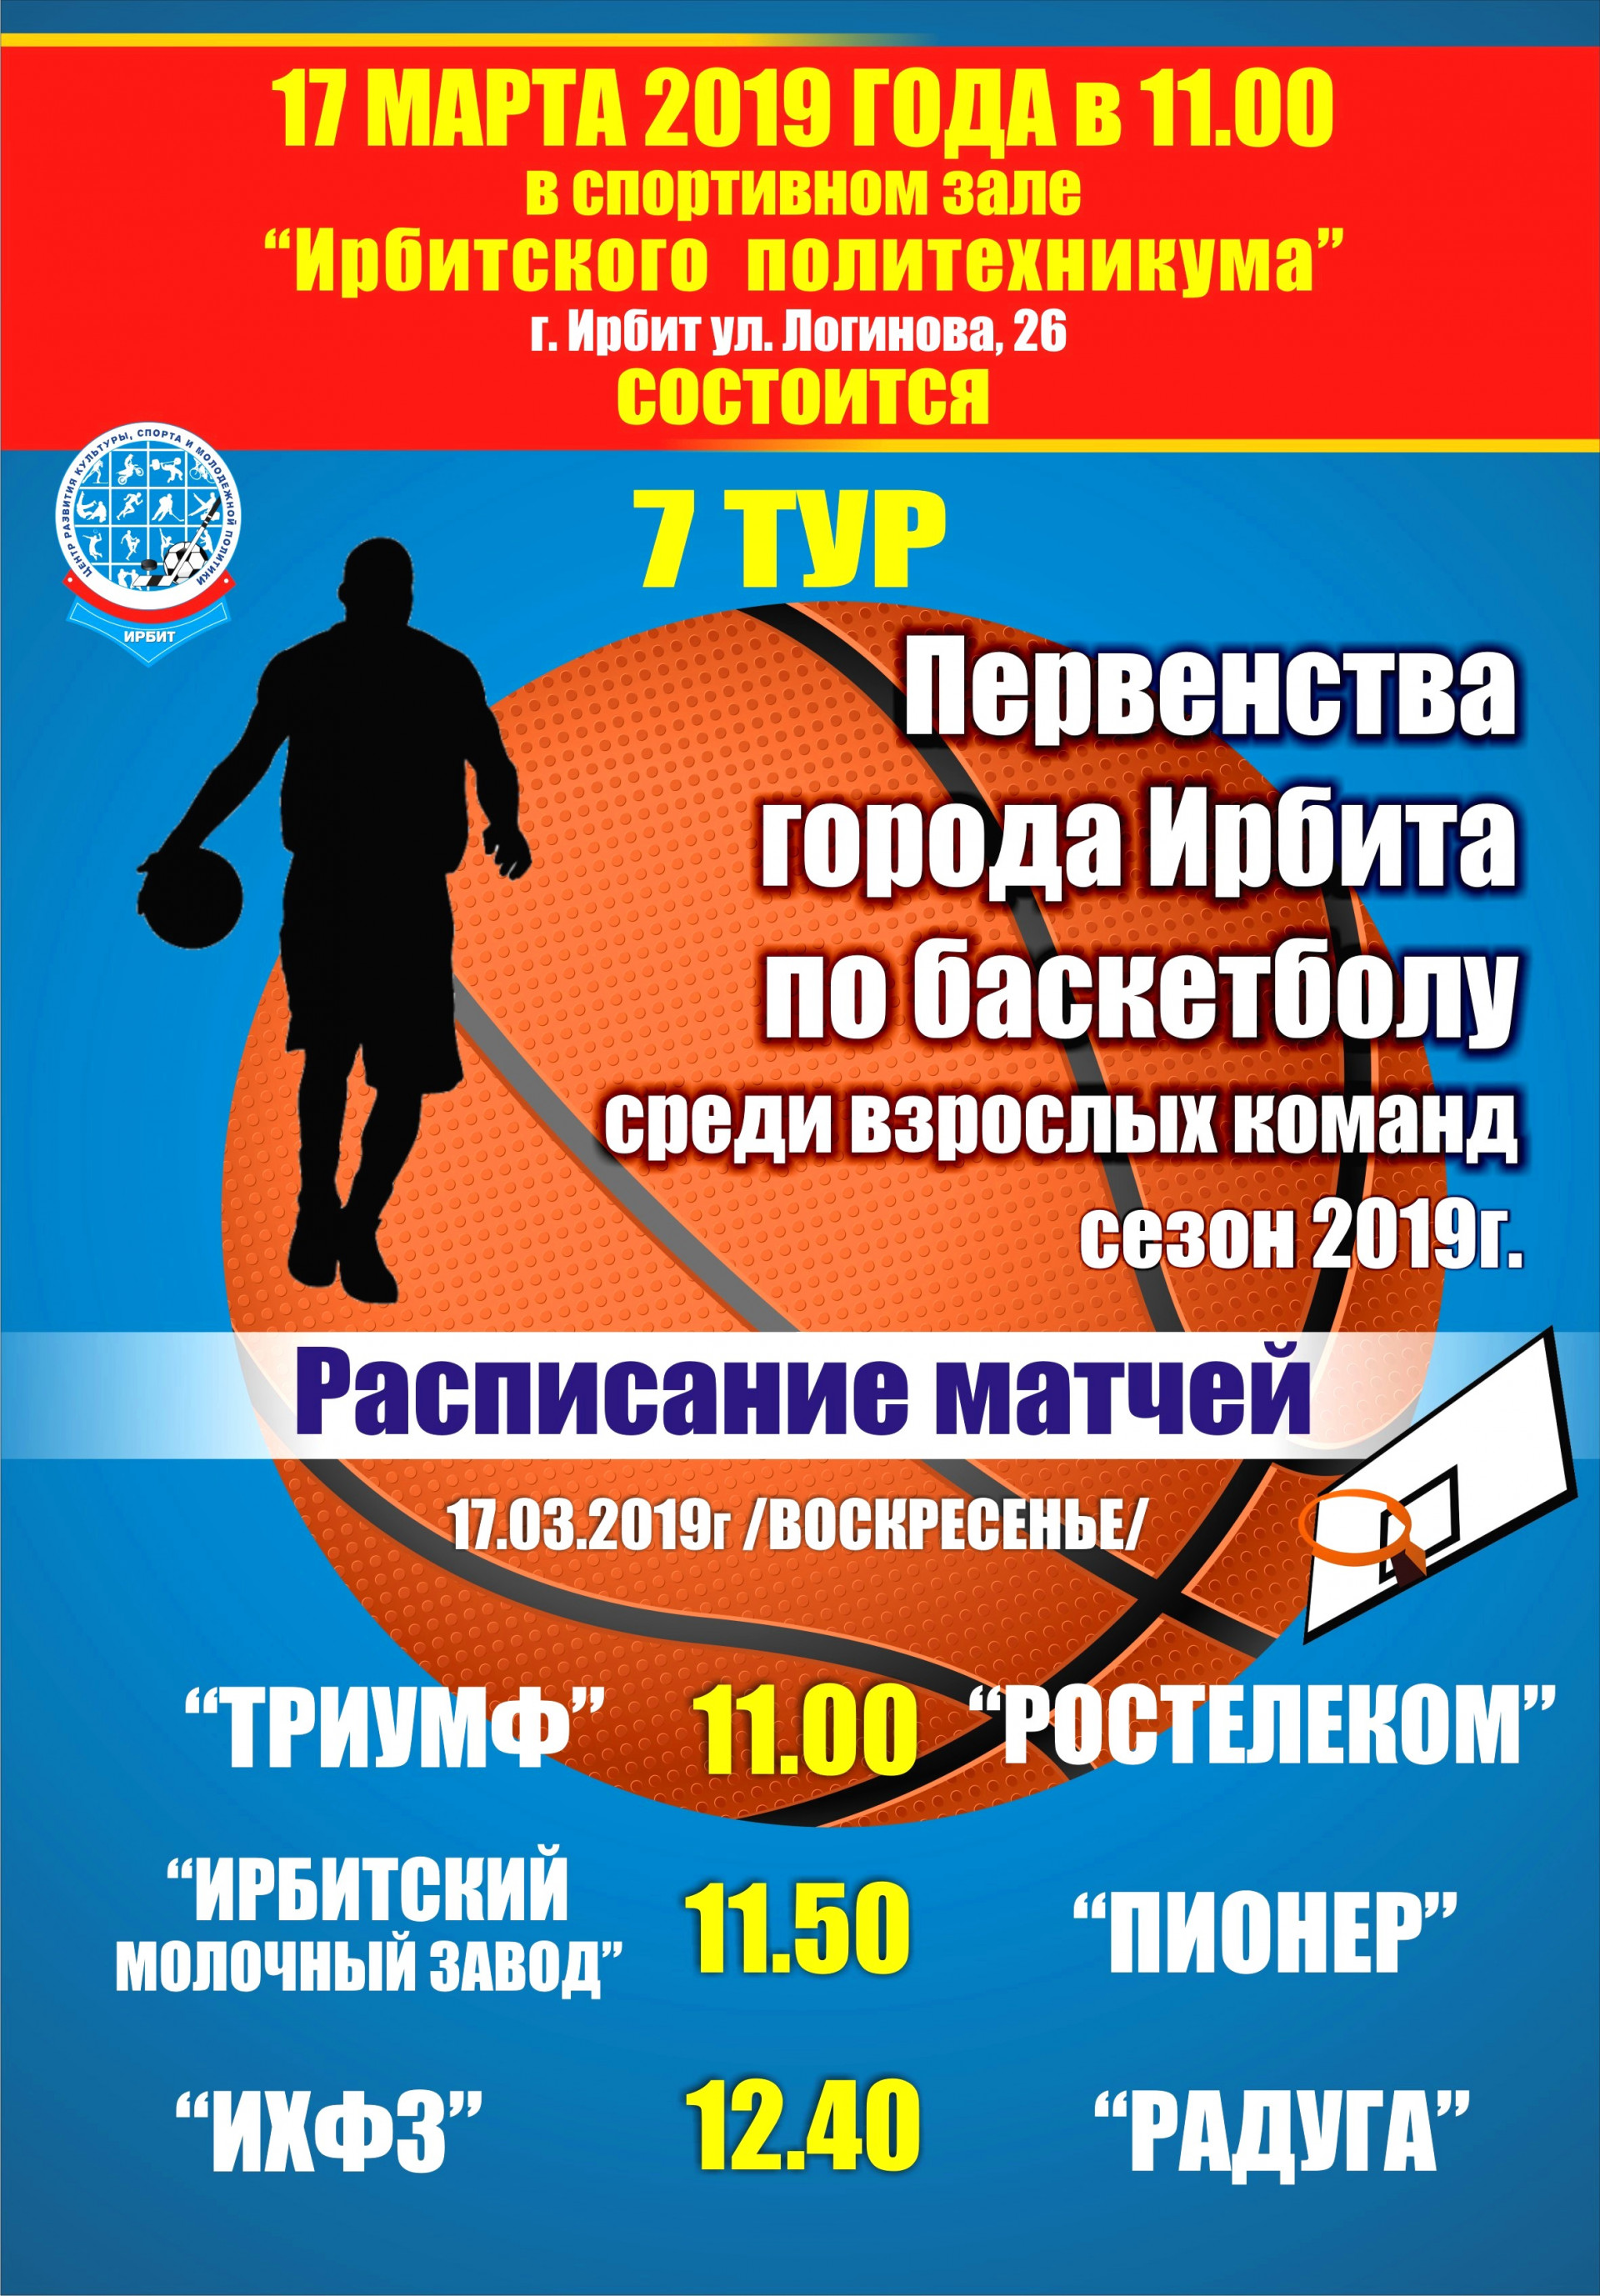 7 тур Первенства города Ирбита по баскетболу среди взрослых команд, сезон 2019 г.